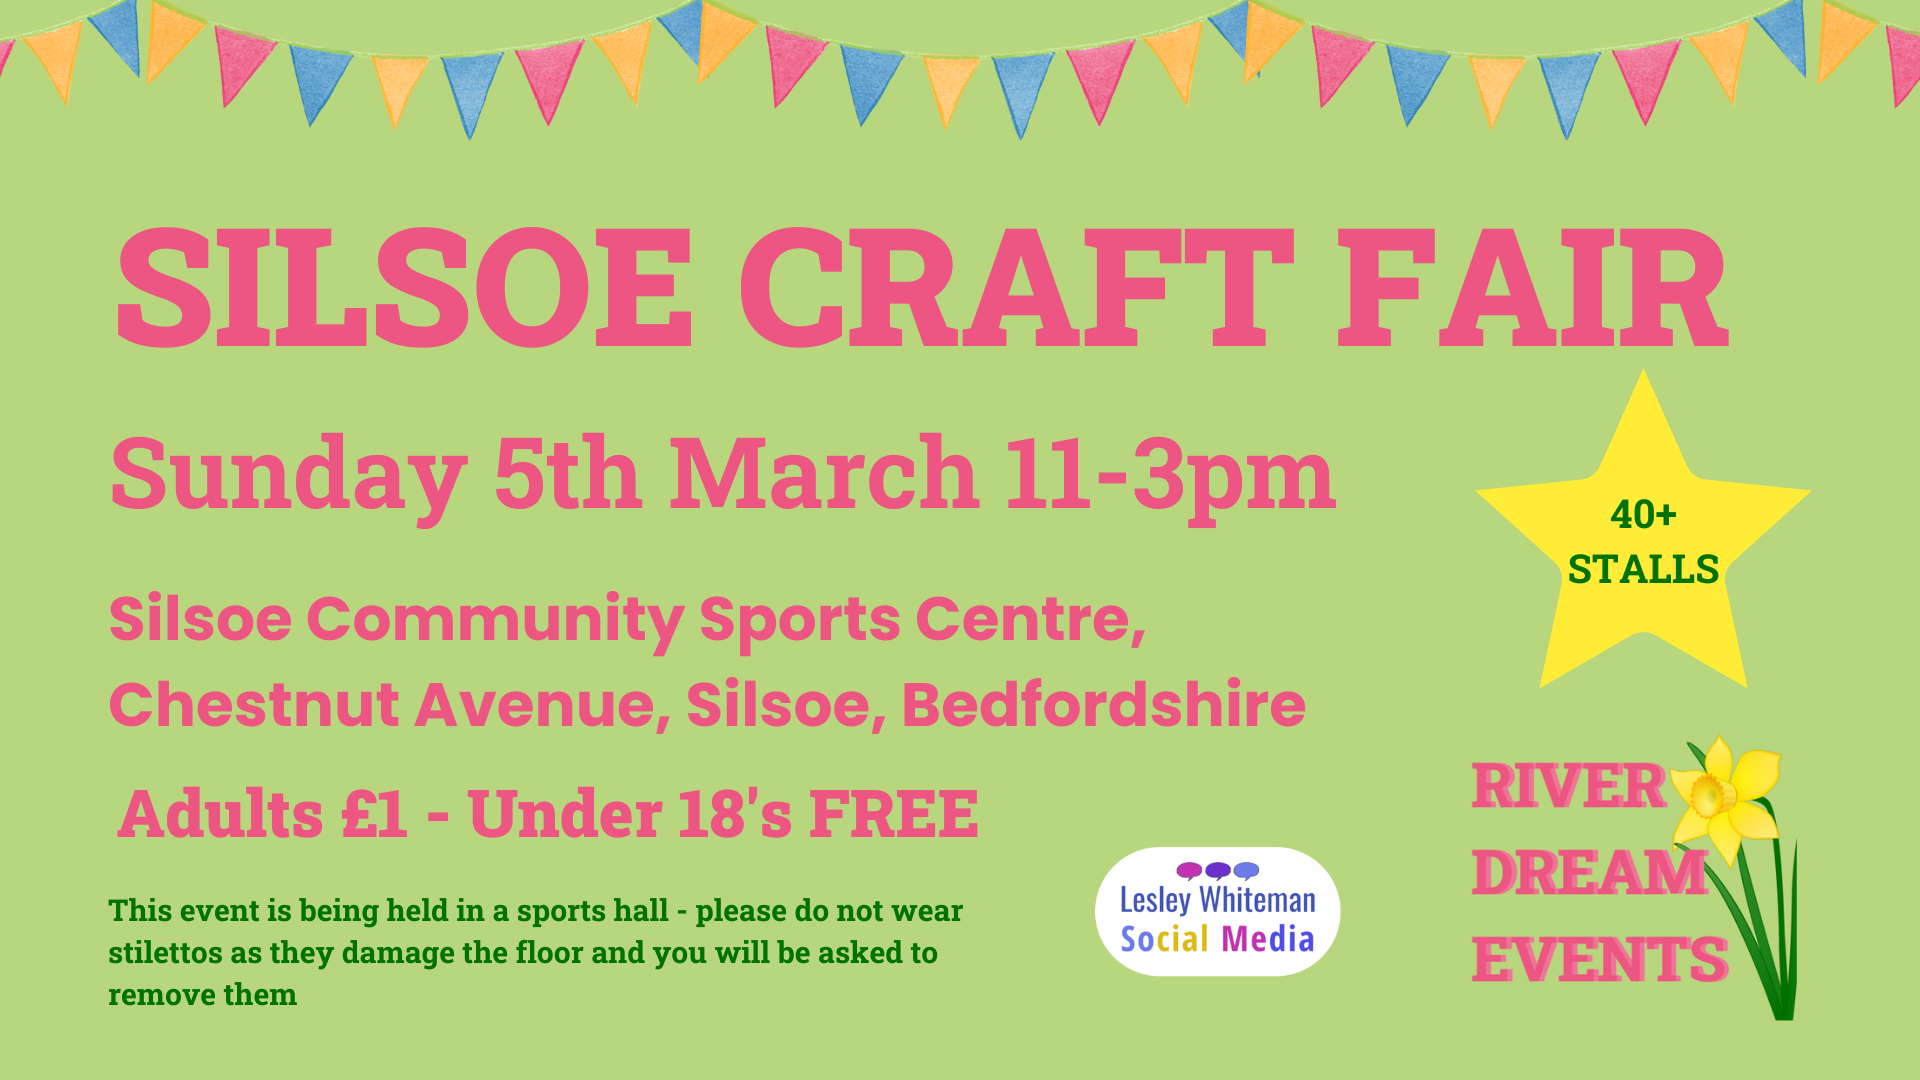 Silsoe Craft Fair, Sunday 5th March, 11-3pm